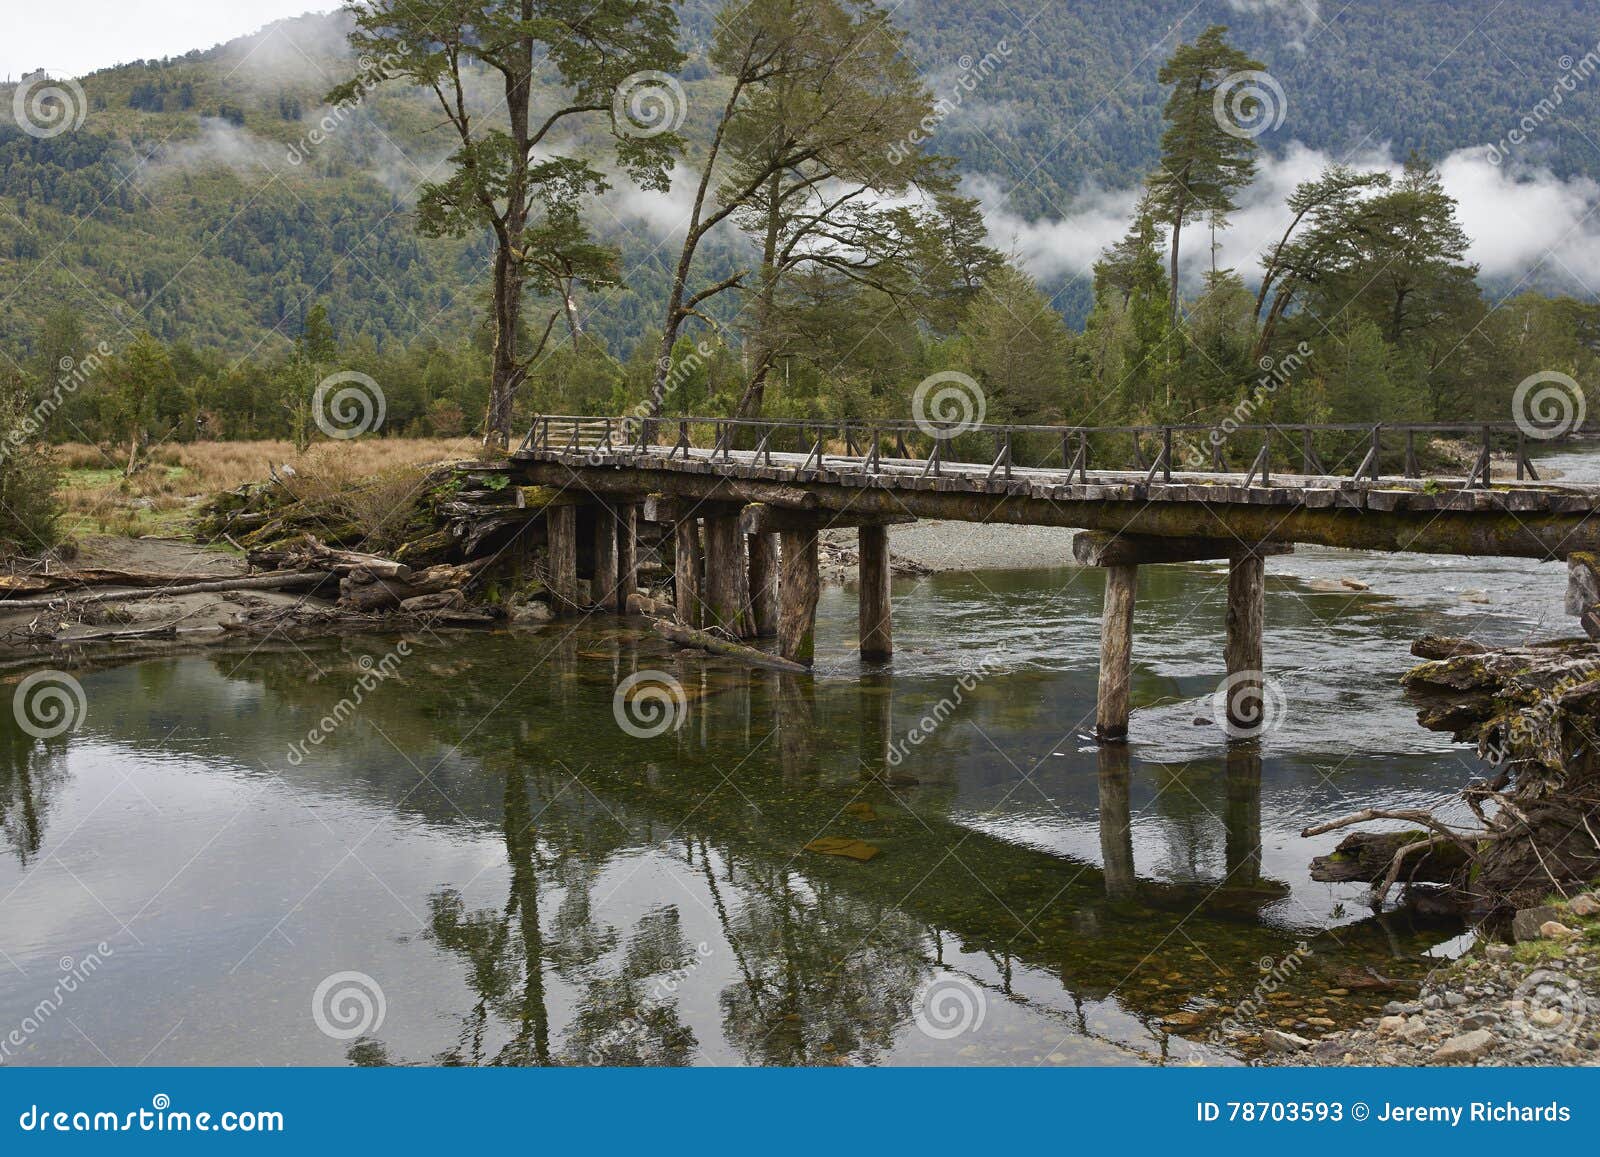 derelict wooden bridge along the carretera austral